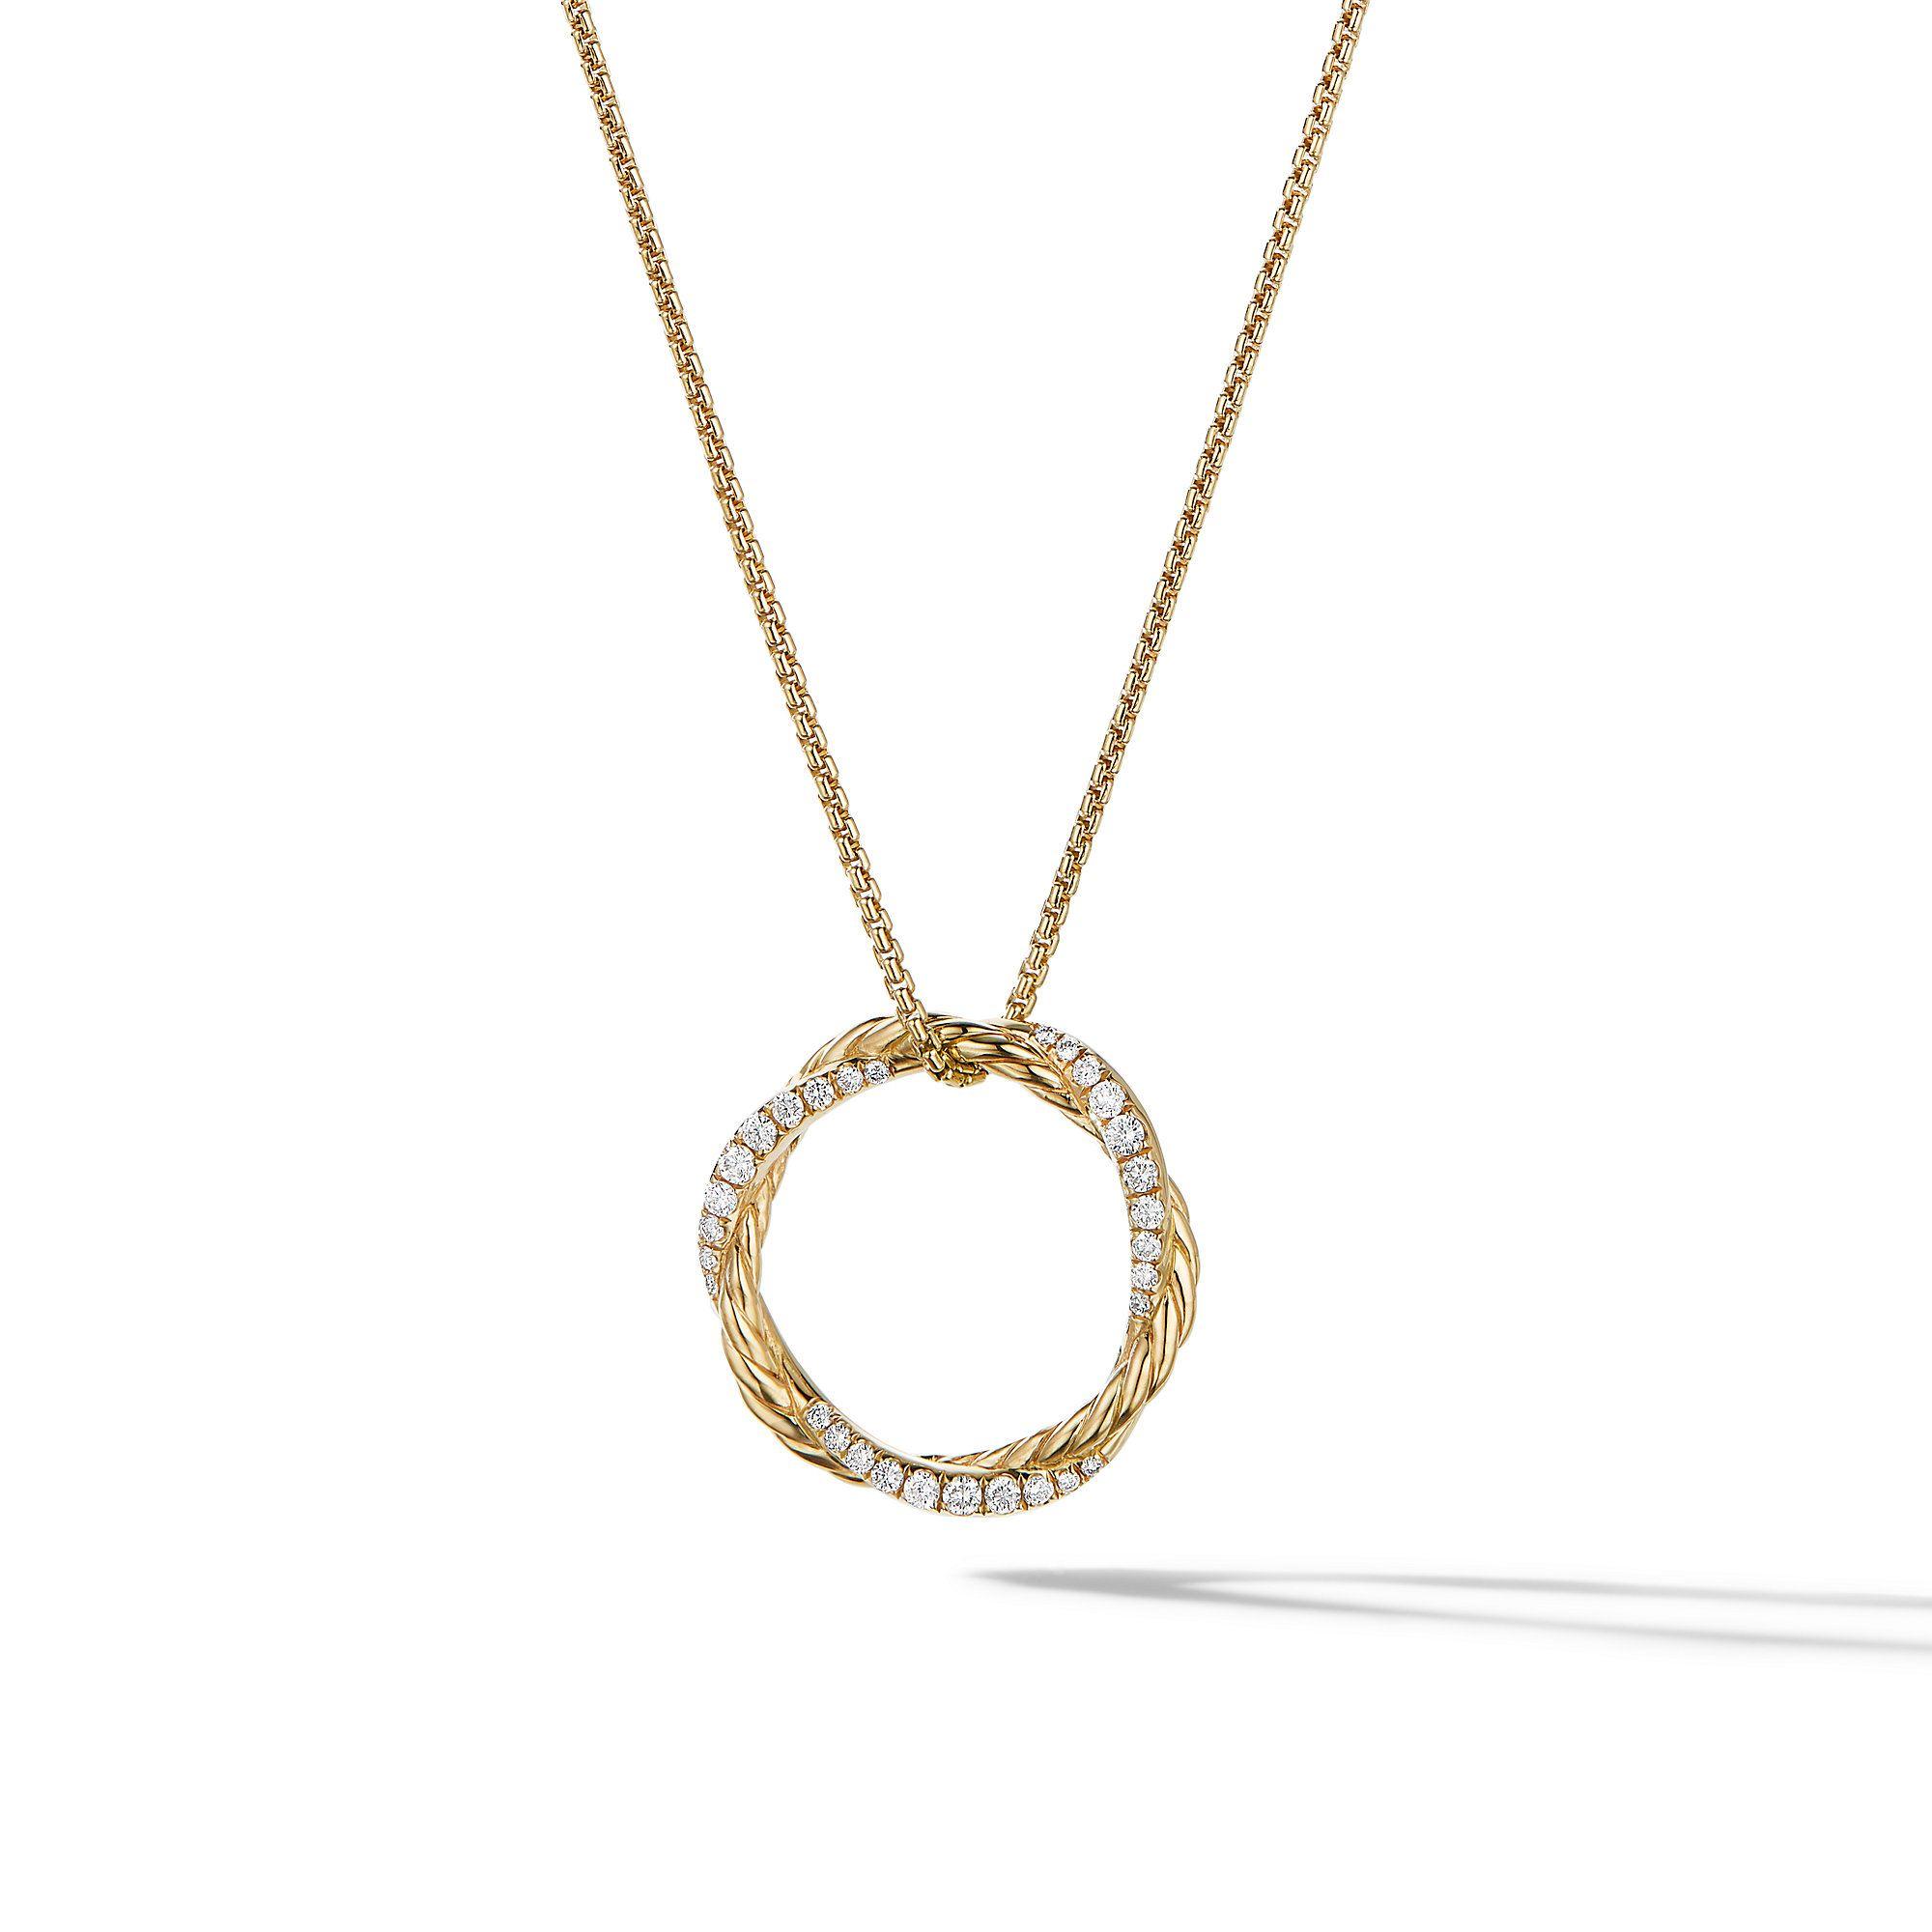 David Yurman Petite Infinity Pendant Necklace in 18k Yellow Gold with Pave Diamonds